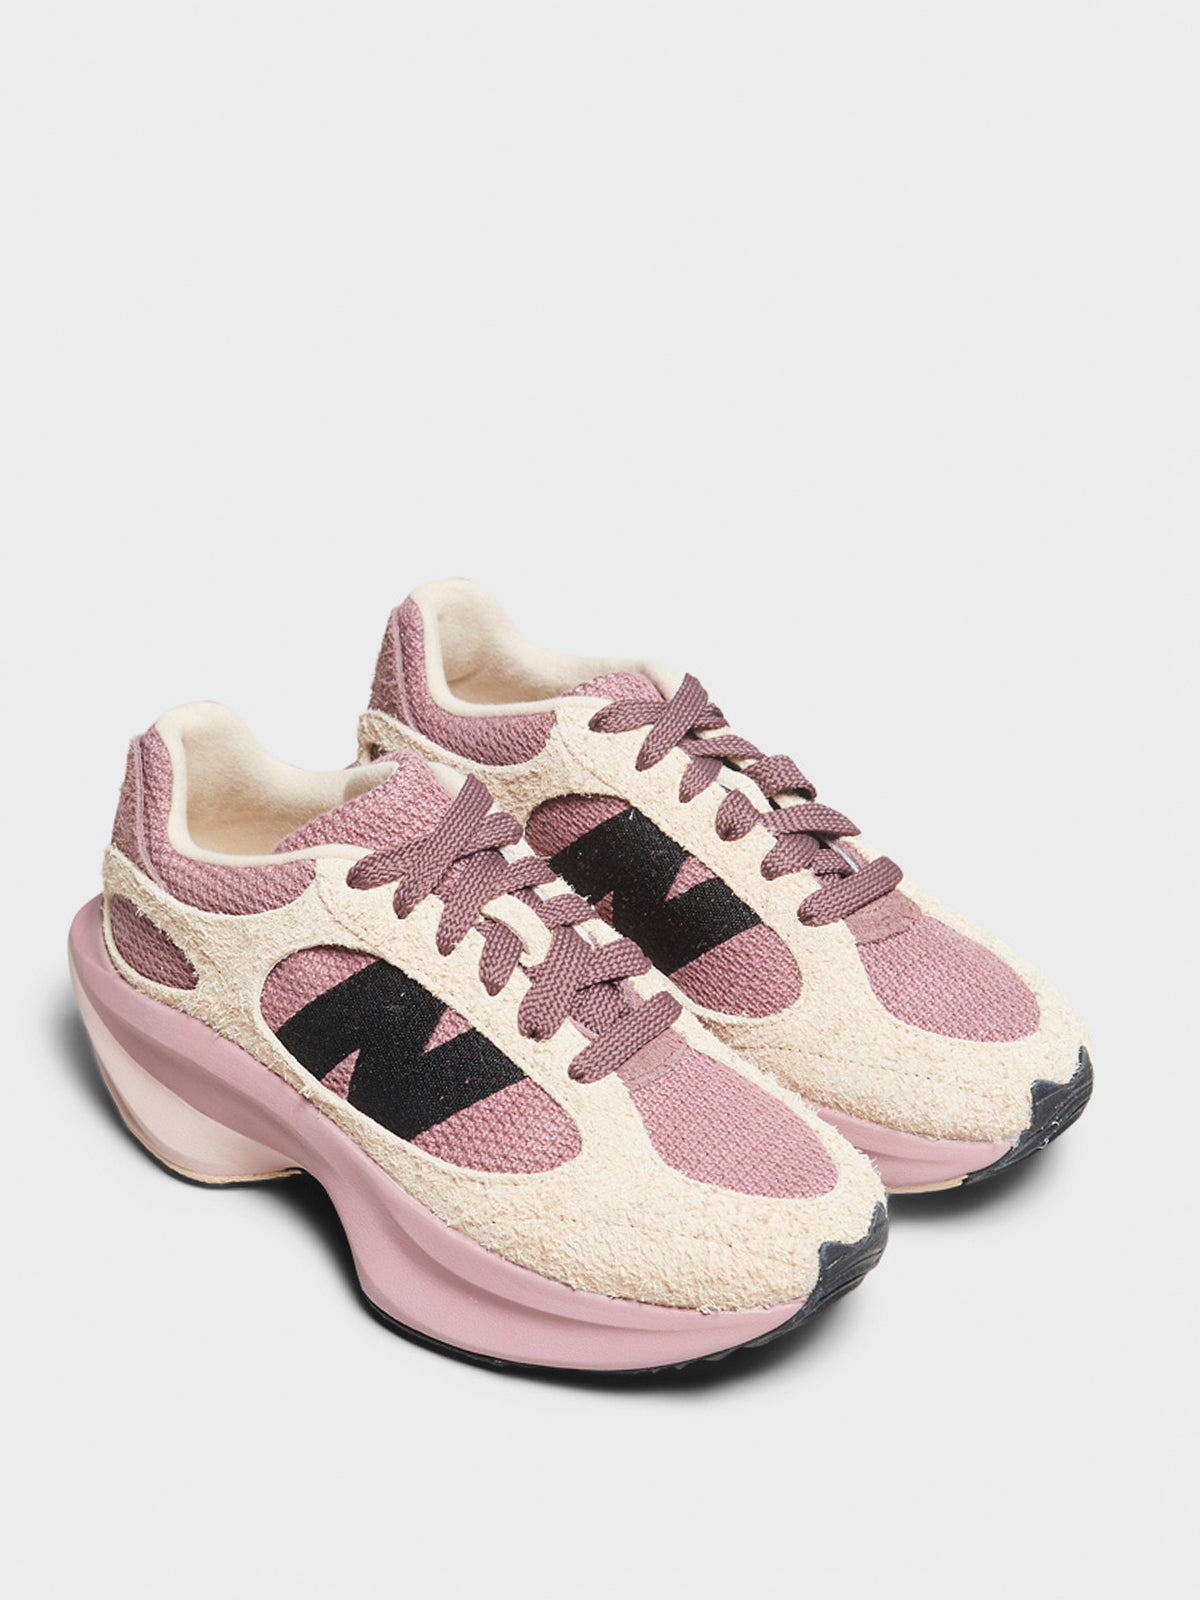 WRPD Sneakers in Pink